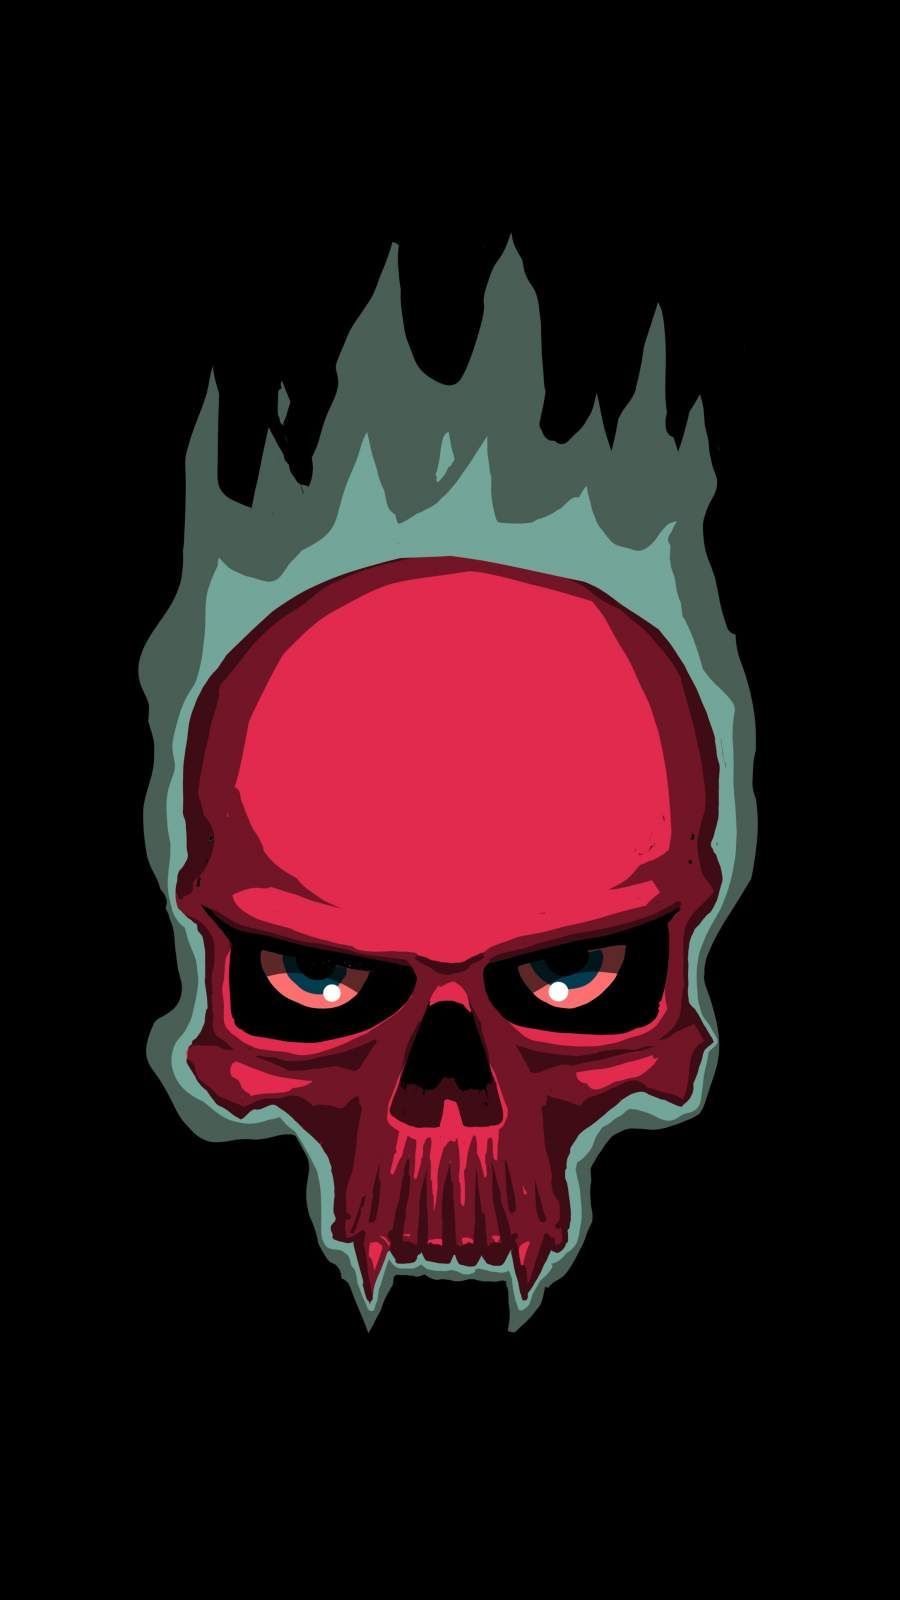 Red Skull iPhone Wallpaper. iPhone wallpaper